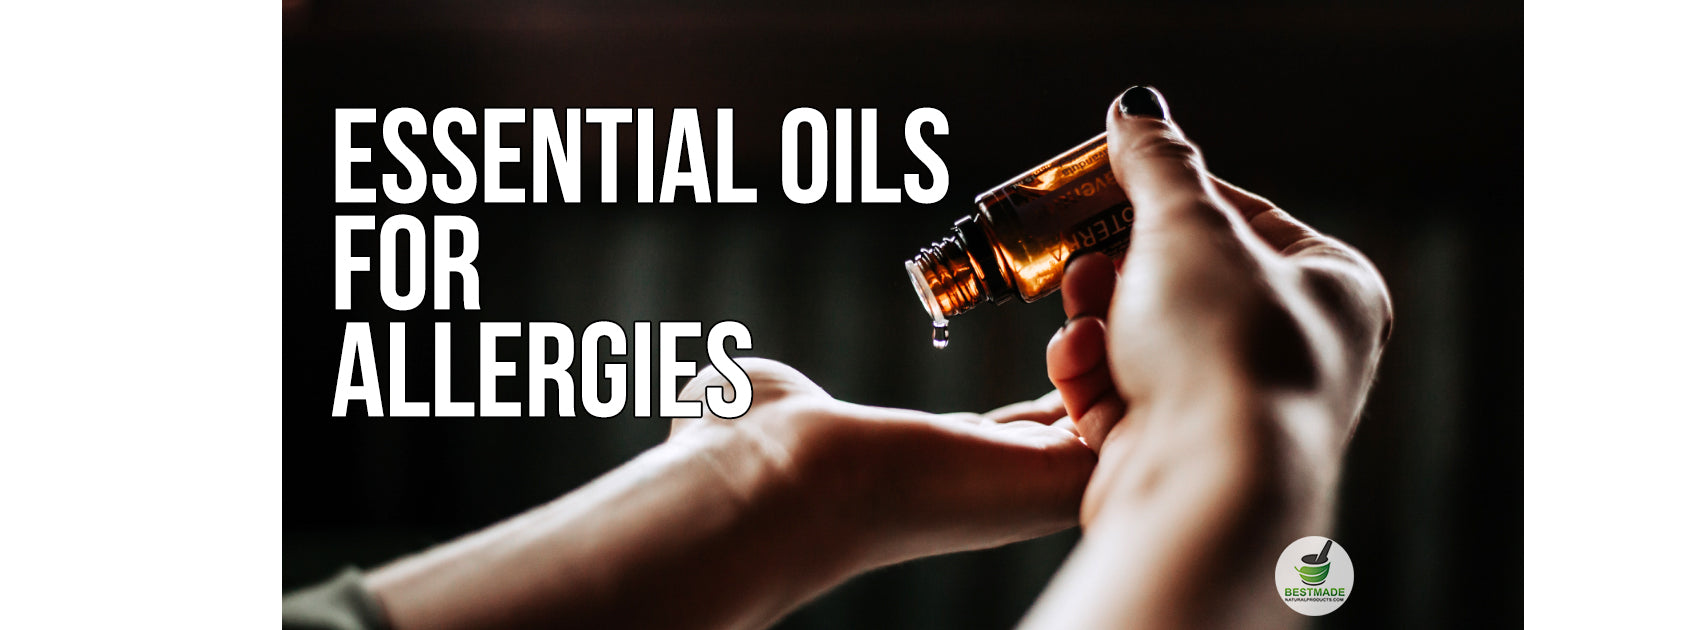 Essential Oils For Allergies